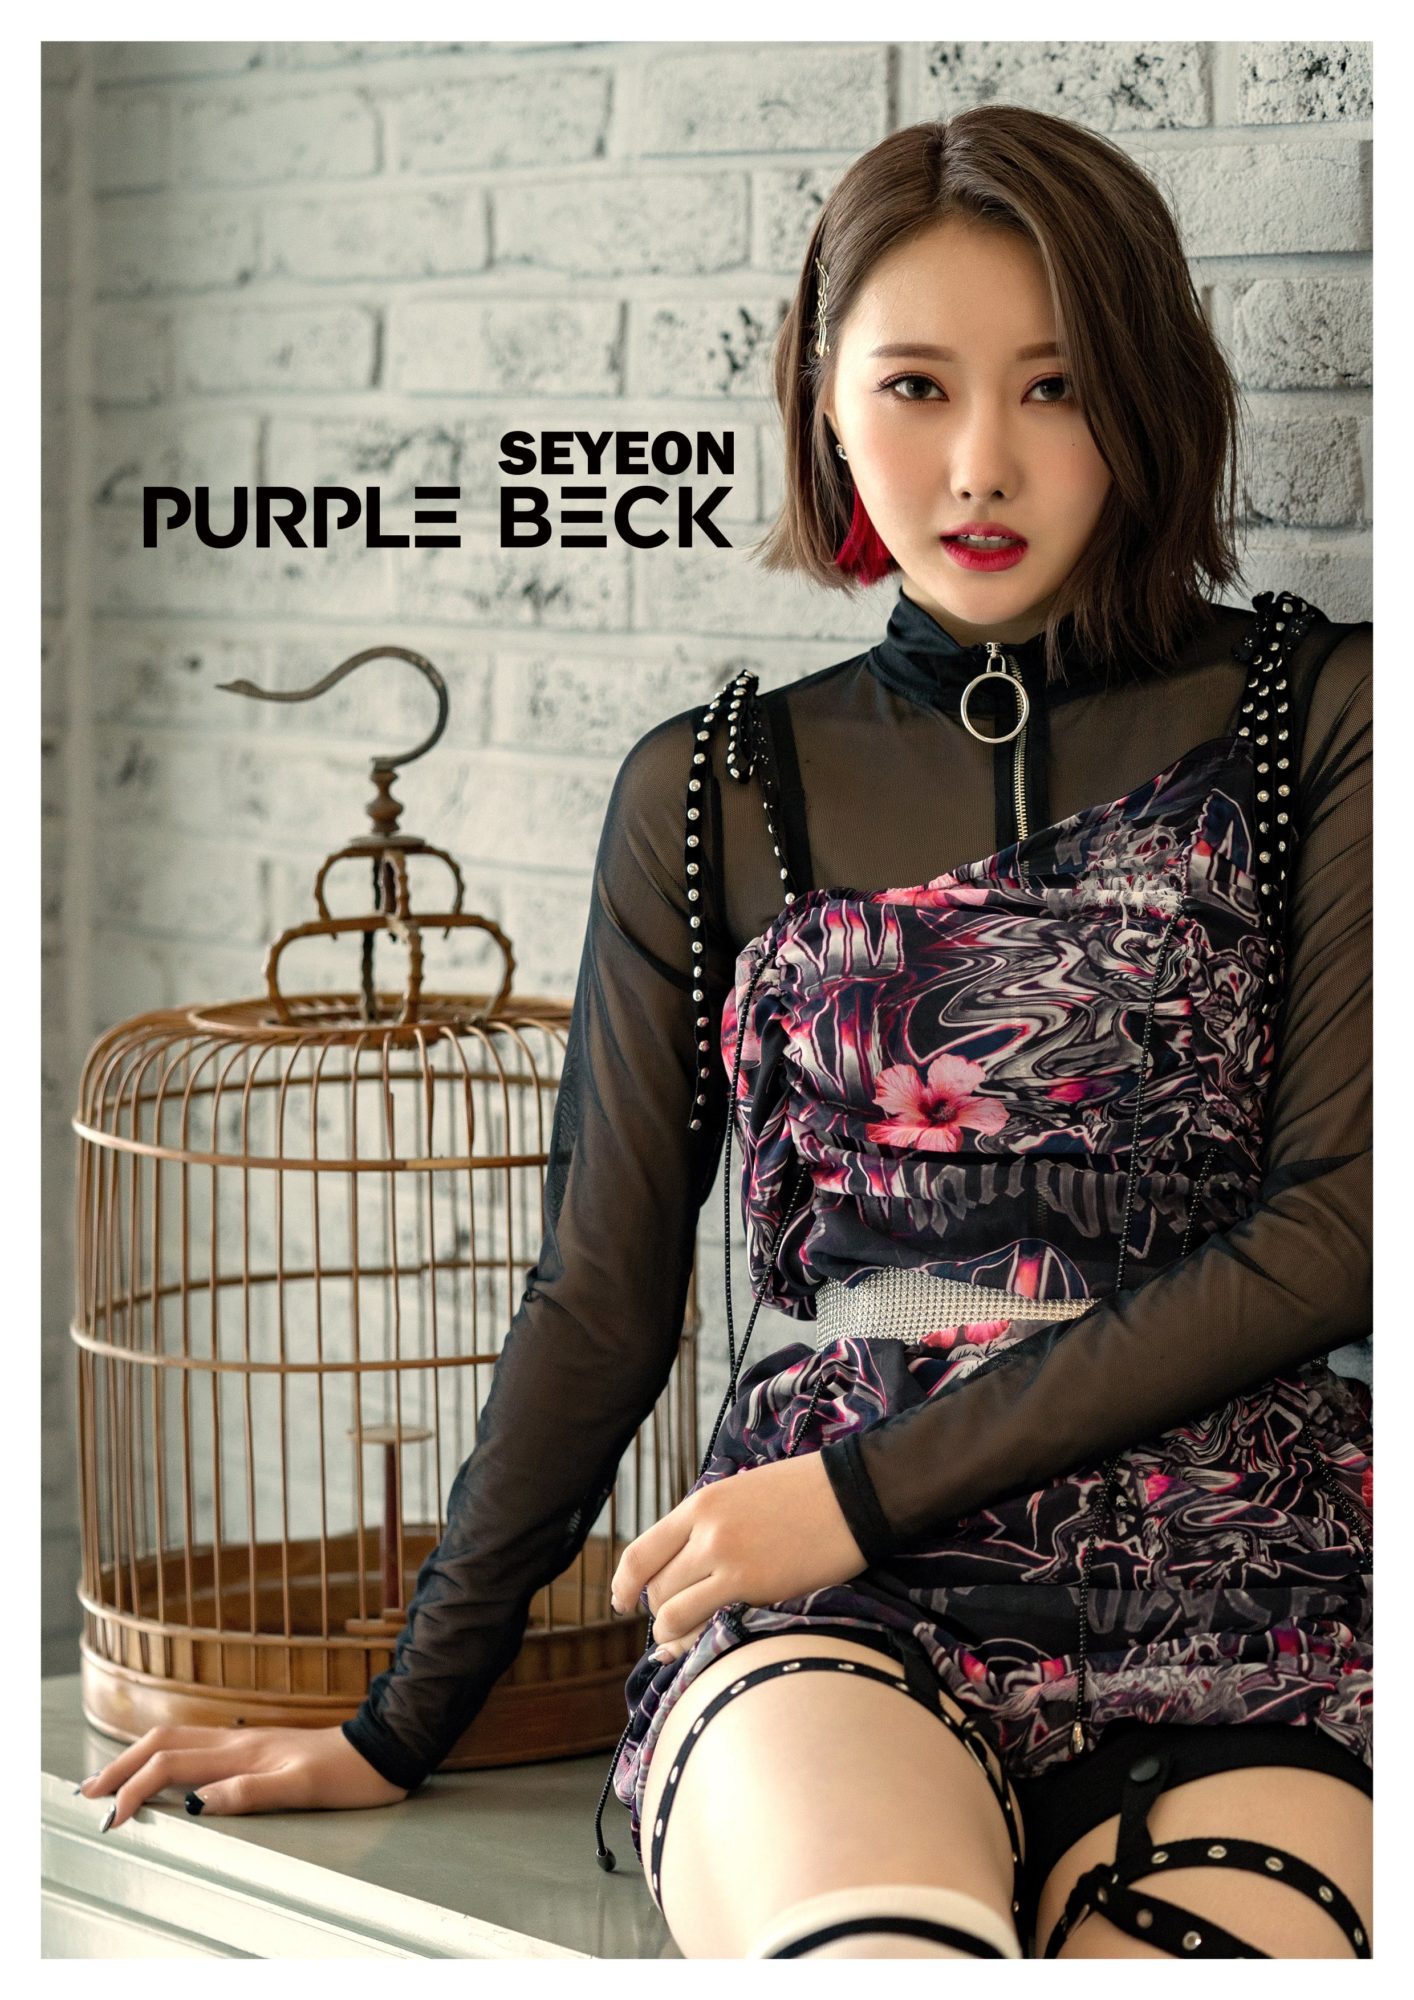 Purplebeck Seyeon Crystal Ball Teaser